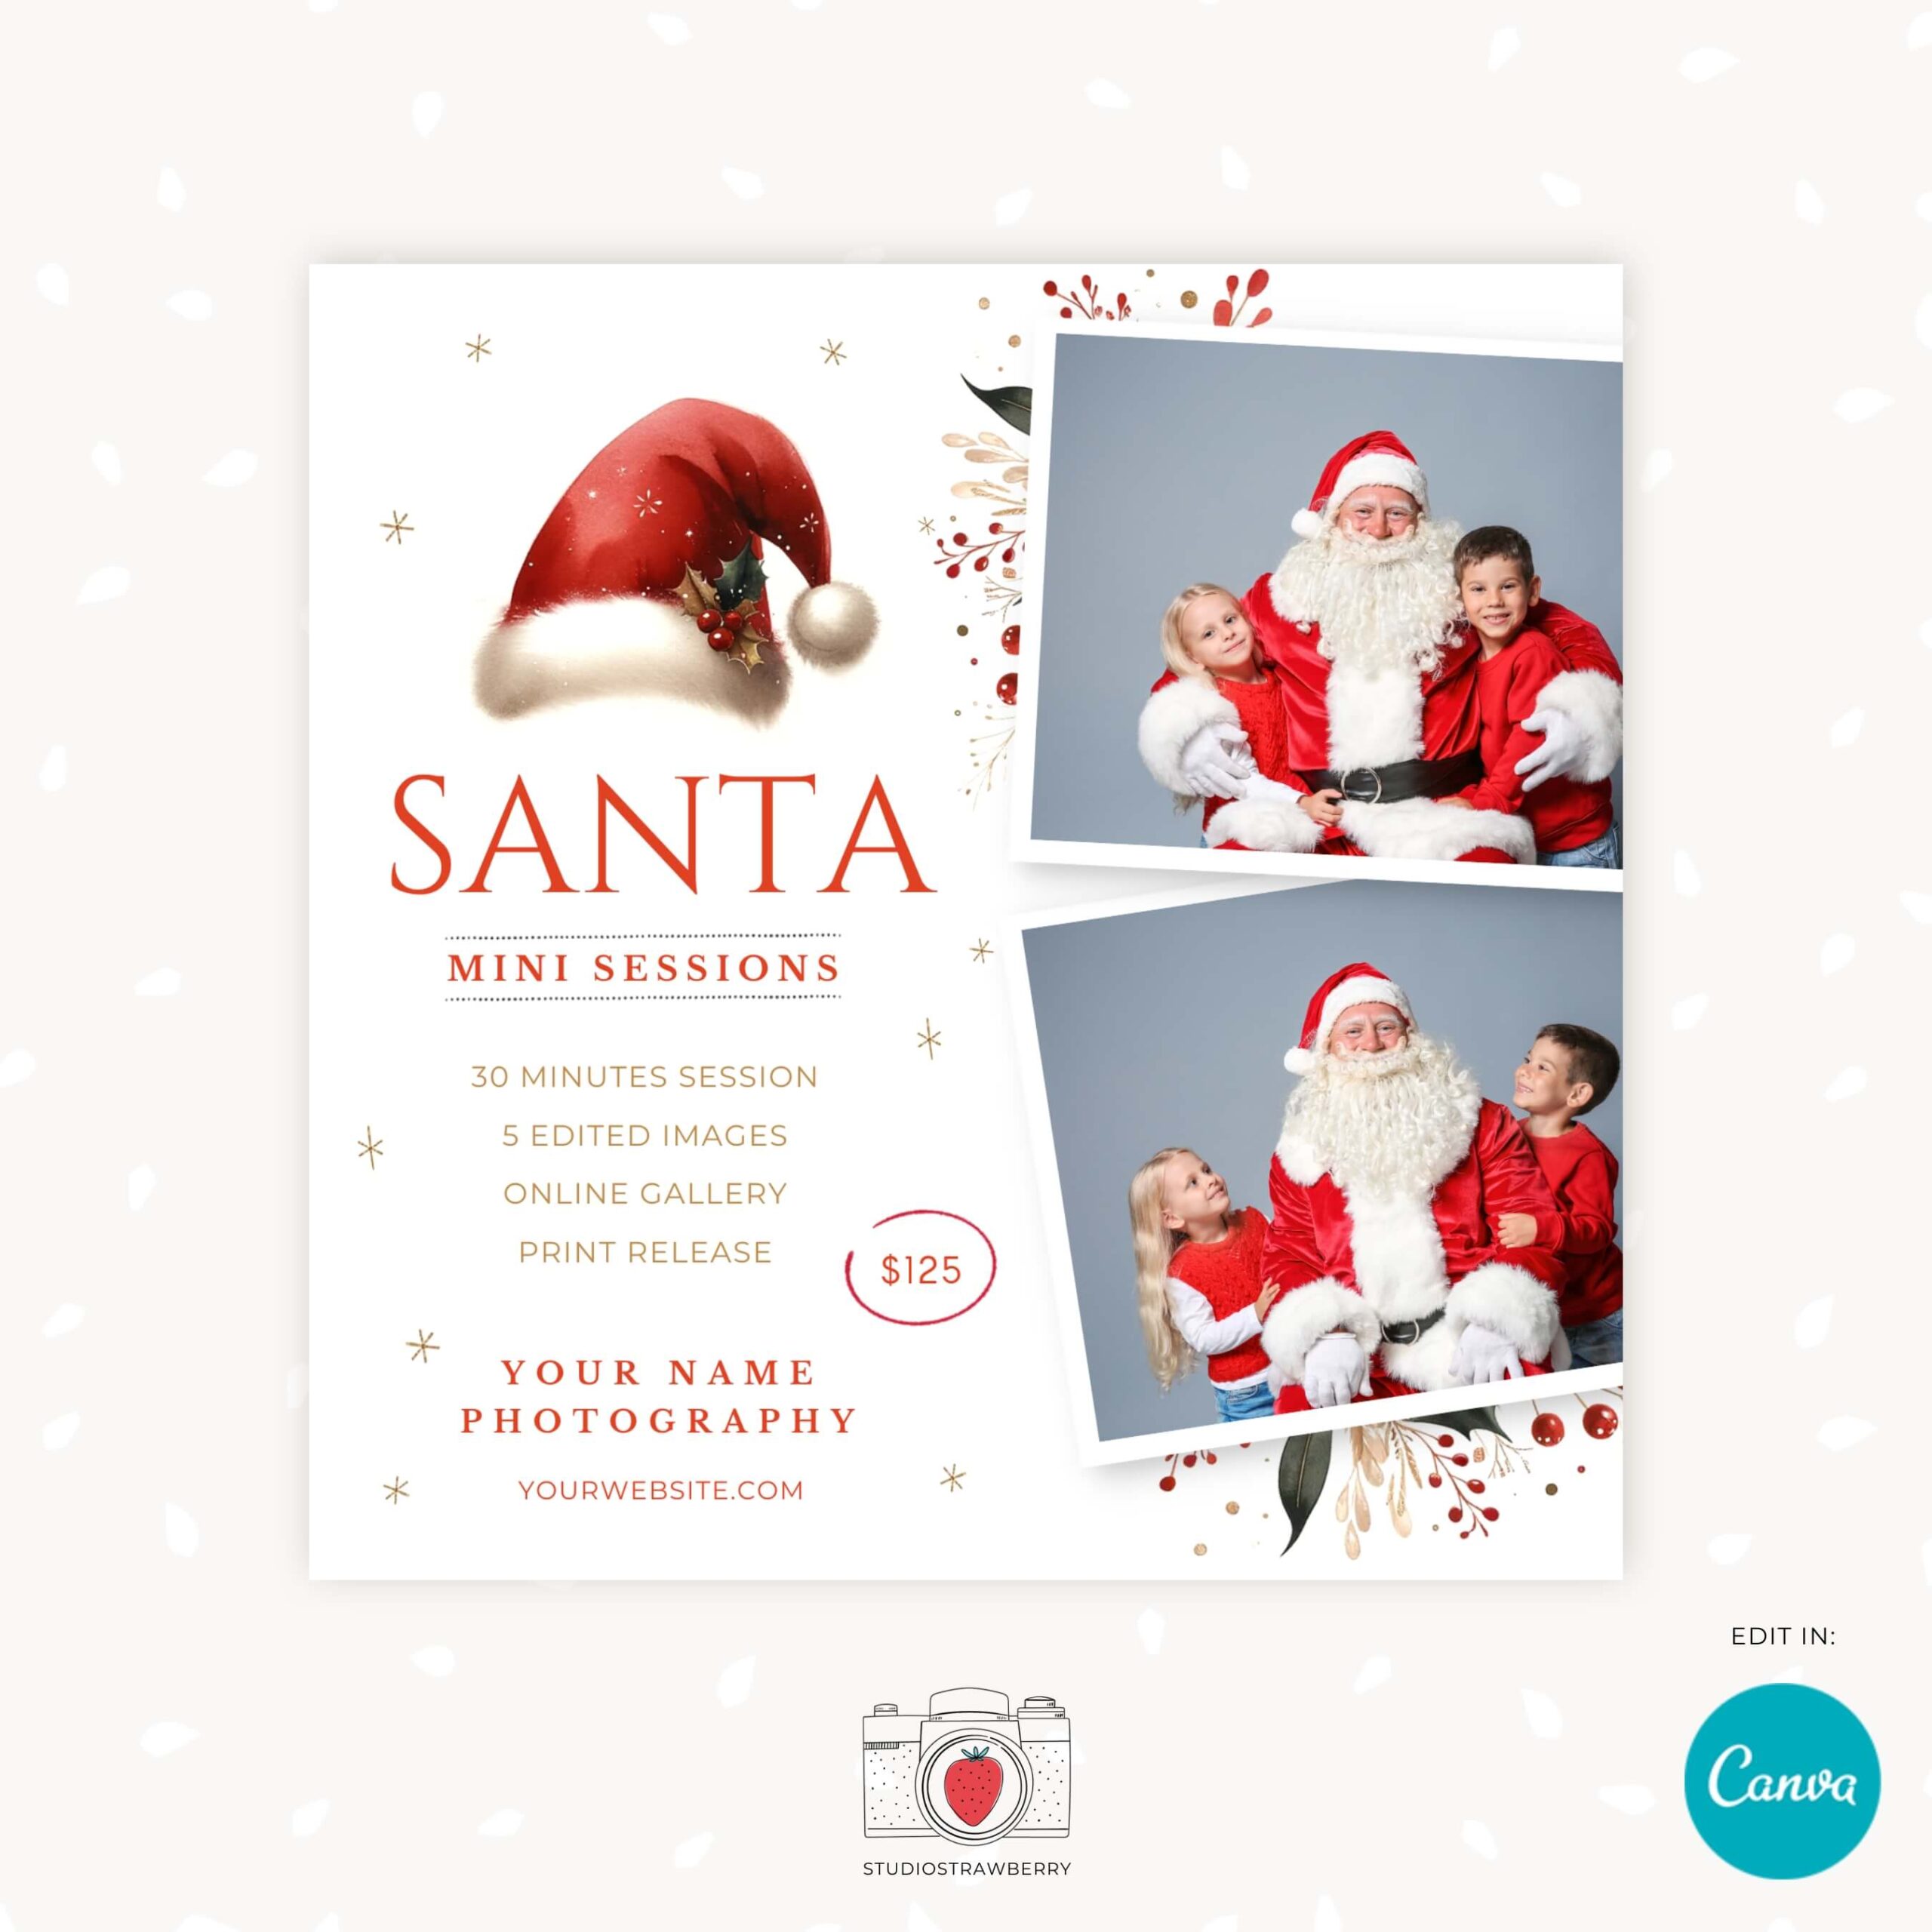 Santa mini sessions template